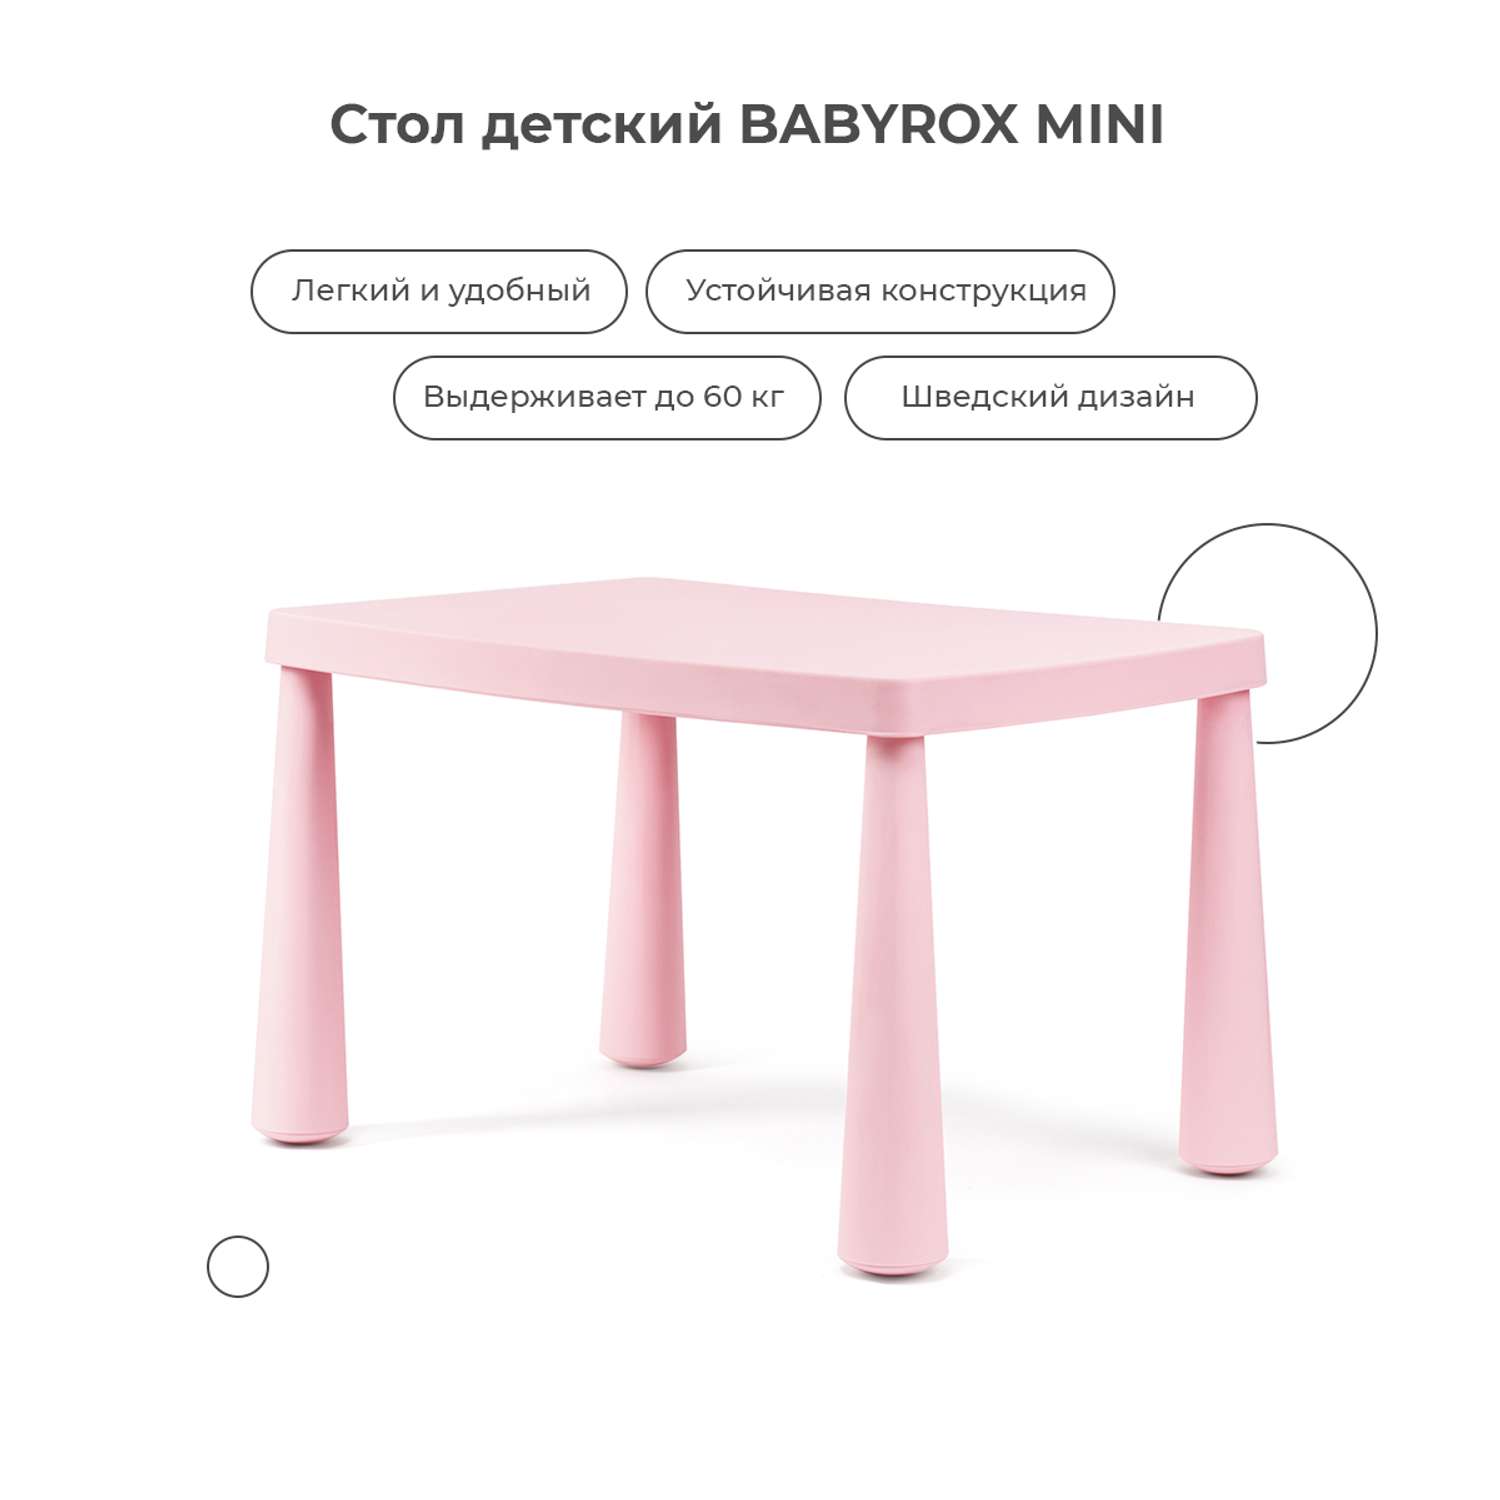 Стол детский BabyRox MINI - фото 4